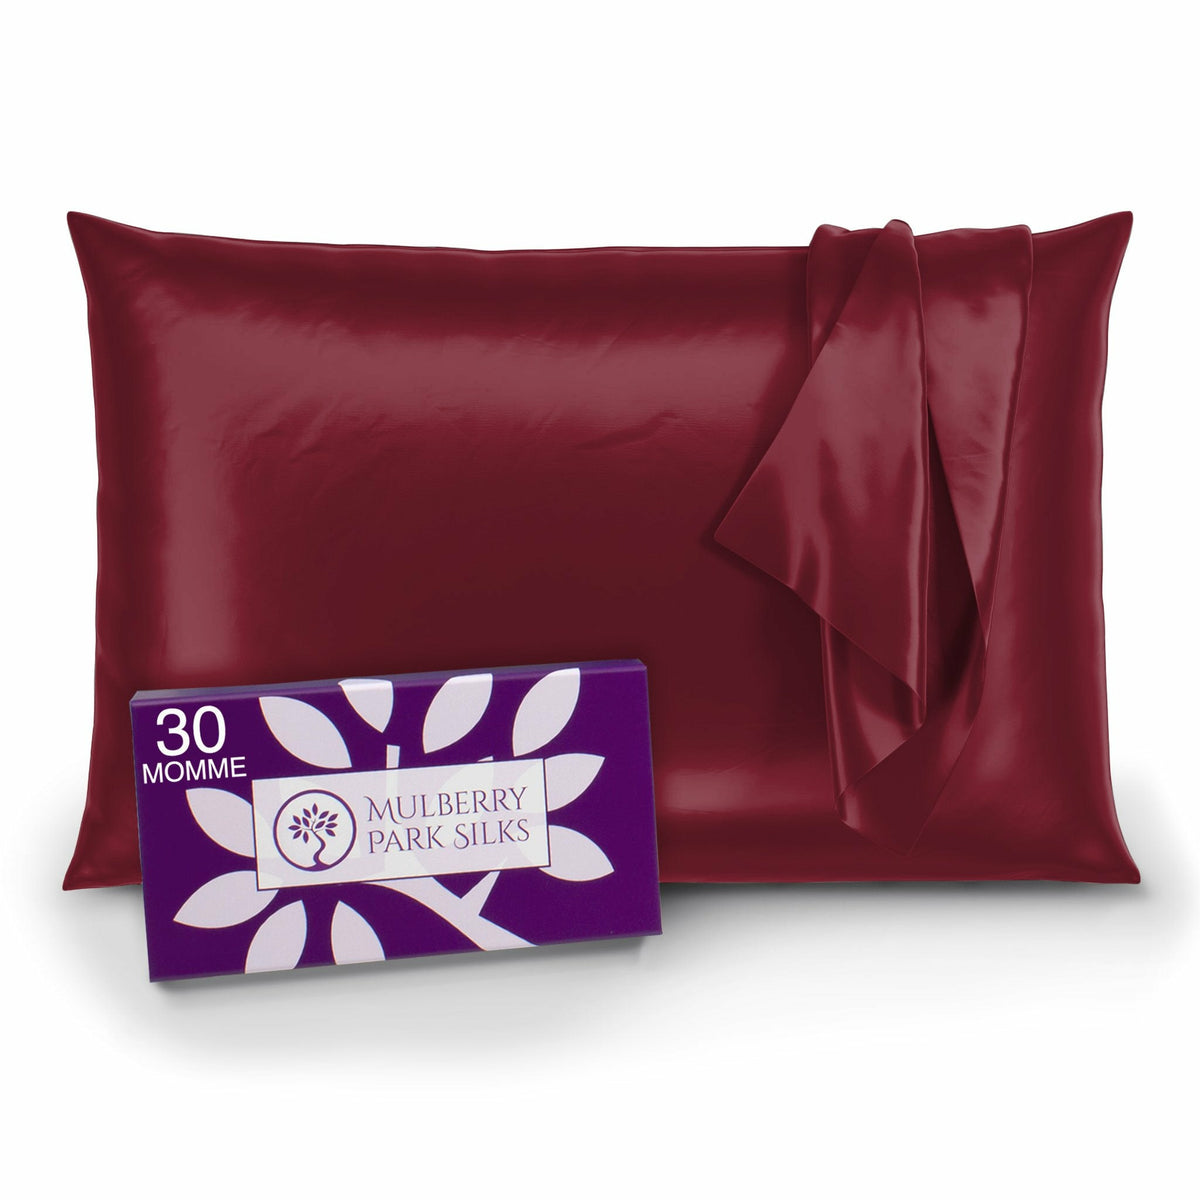 Mulberry Park Silks 30 Momme Silk Pillowcase Main Ruby Fine Linens